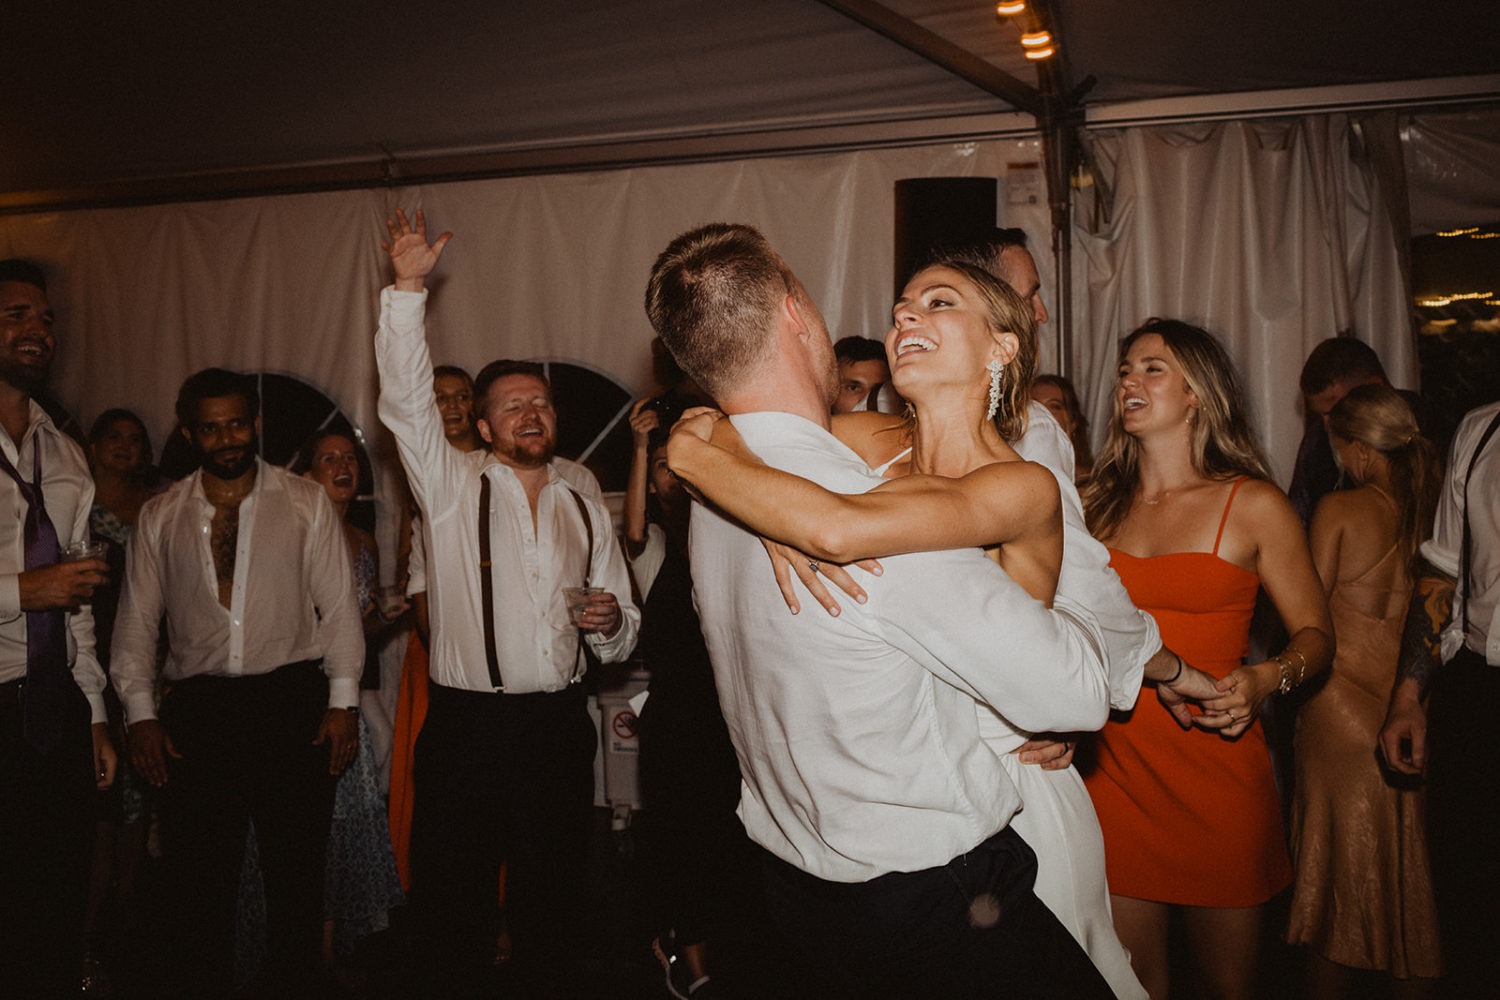 couple dances at wedding reception